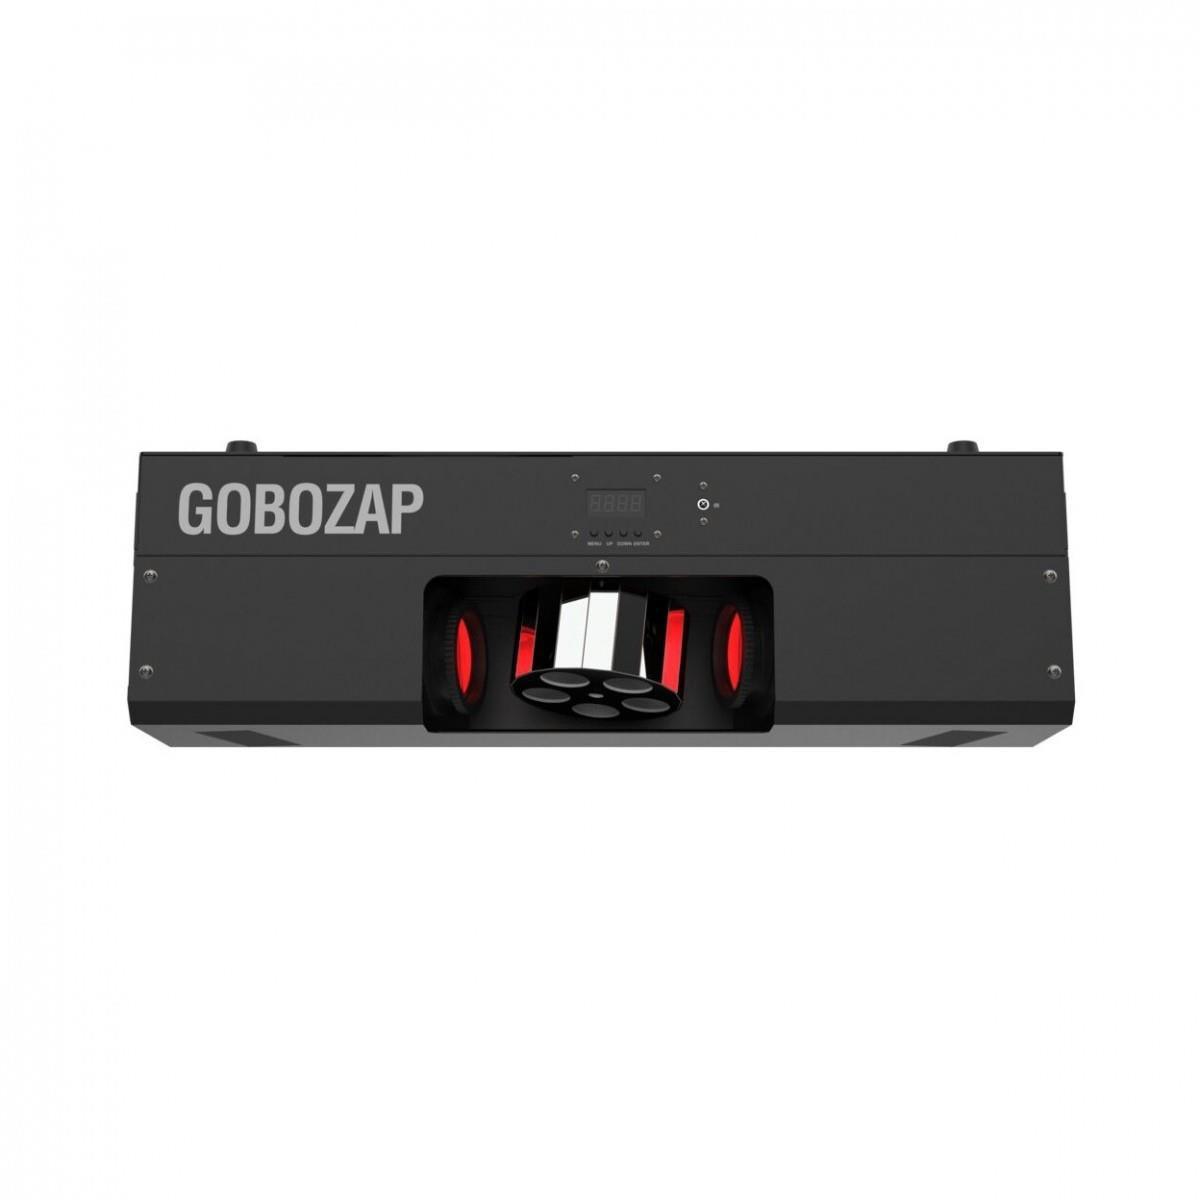 2 x Chauvet Gobozap LED Barrel Scanner with DMX Cable - DY Pro Audio